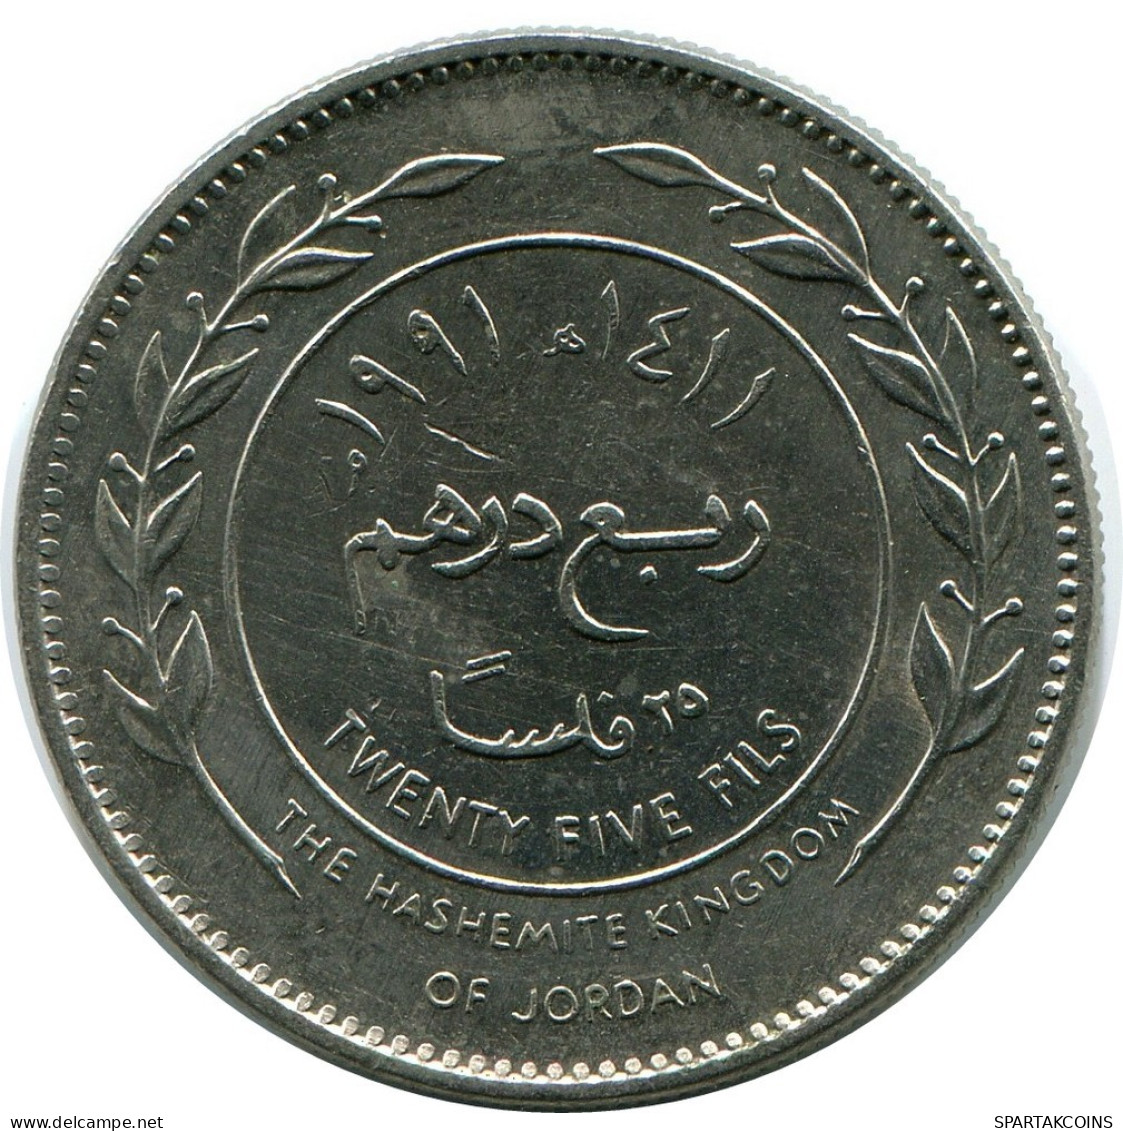 ¼ DIRHAM / 25 FILS 1991 JORDANIA JORDAN Moneda #AP082.E.A - Jordanien